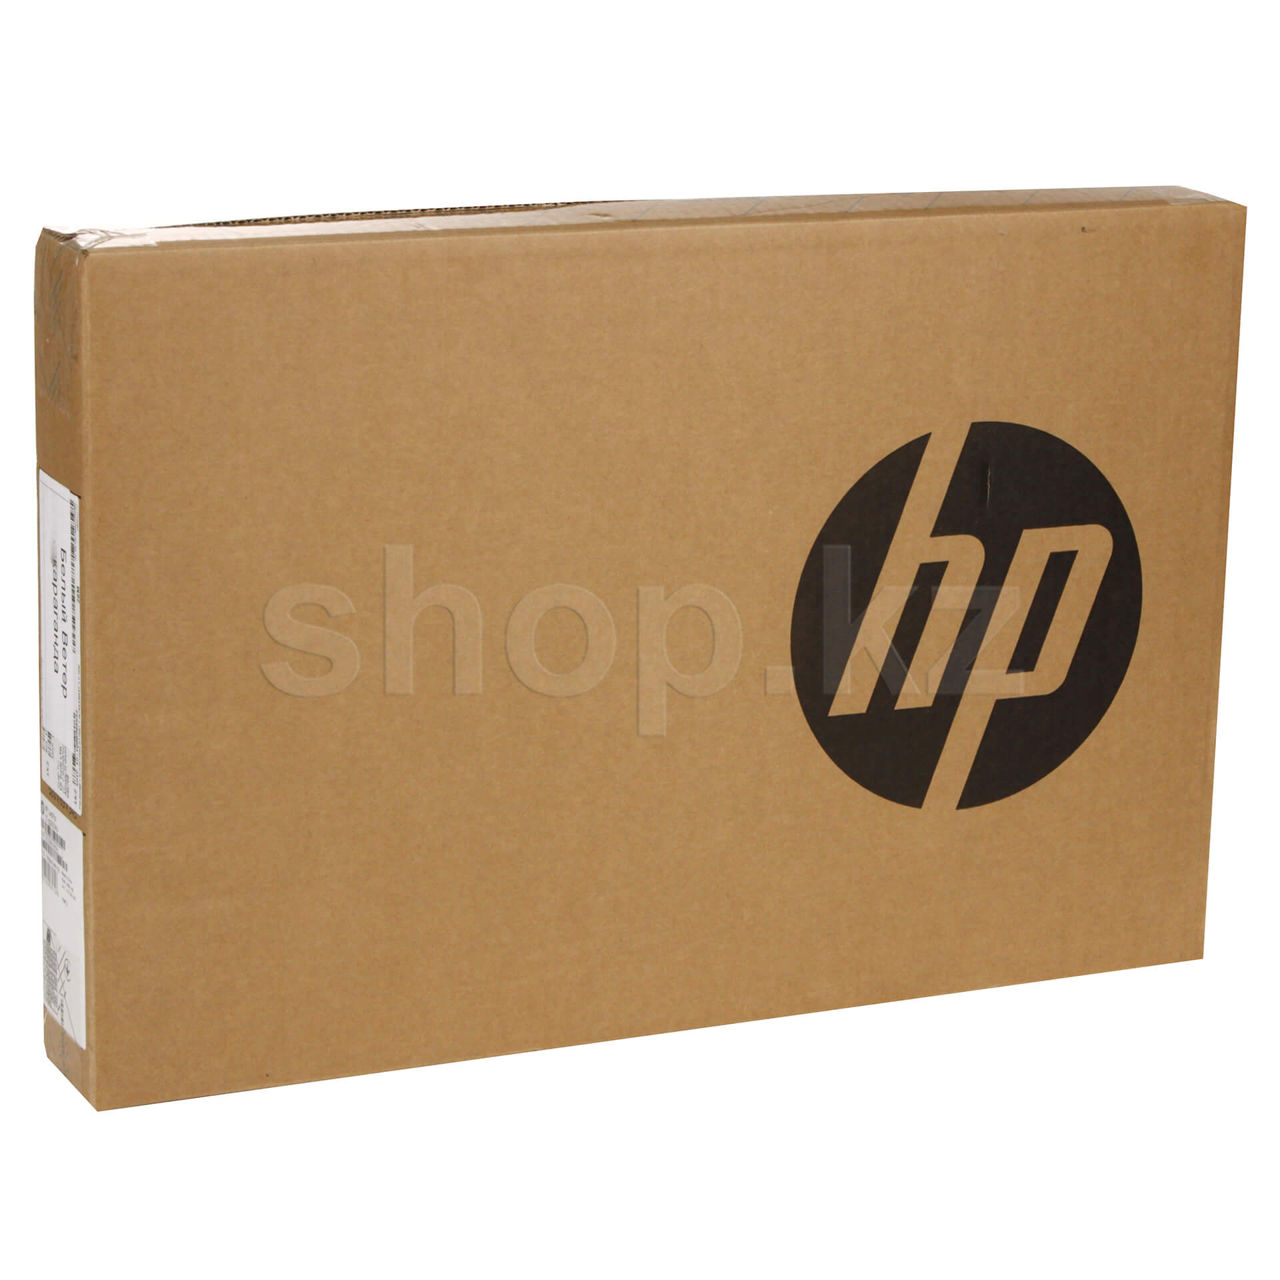 HP Laptop 17-cn0011sf PC Portable 17 FHD (Intel Core i5-1135G7